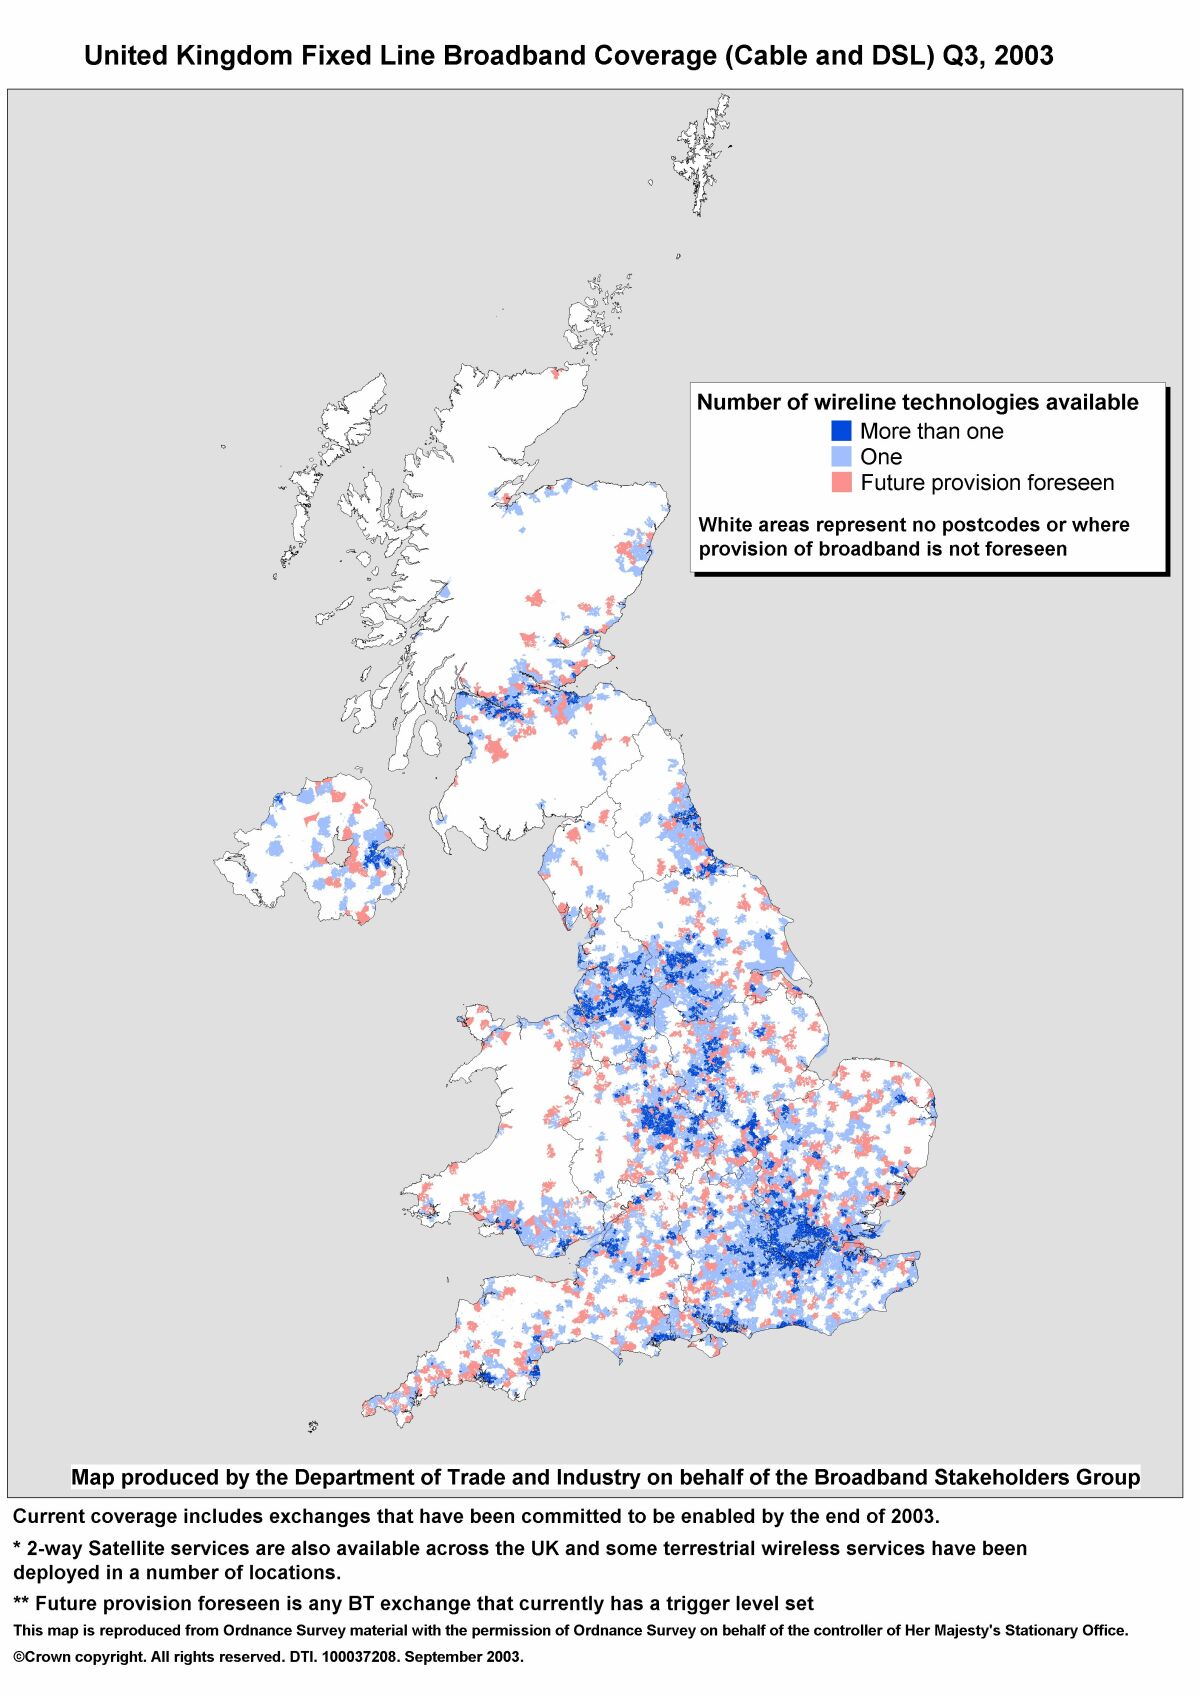 Latest UK Fixed Line Broadband Coverage Maps show ...